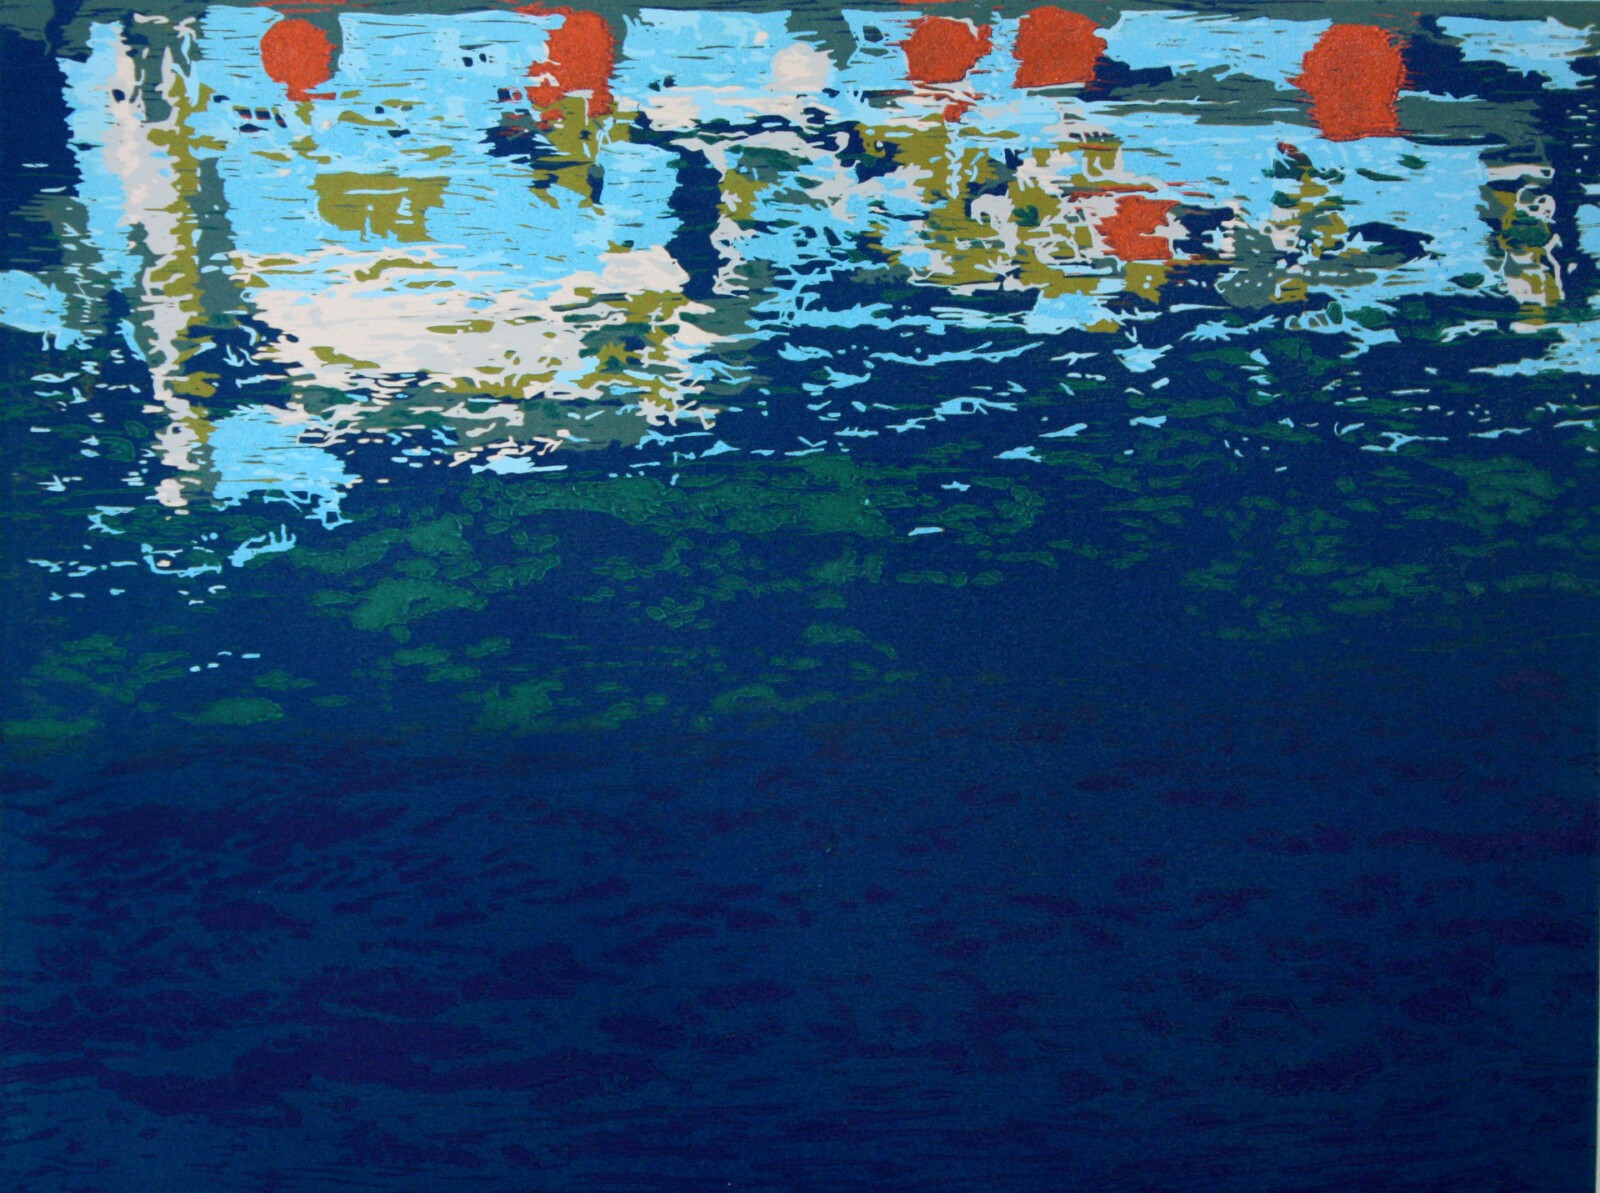 Karen Klee-Atlin, Reflection, woodcut